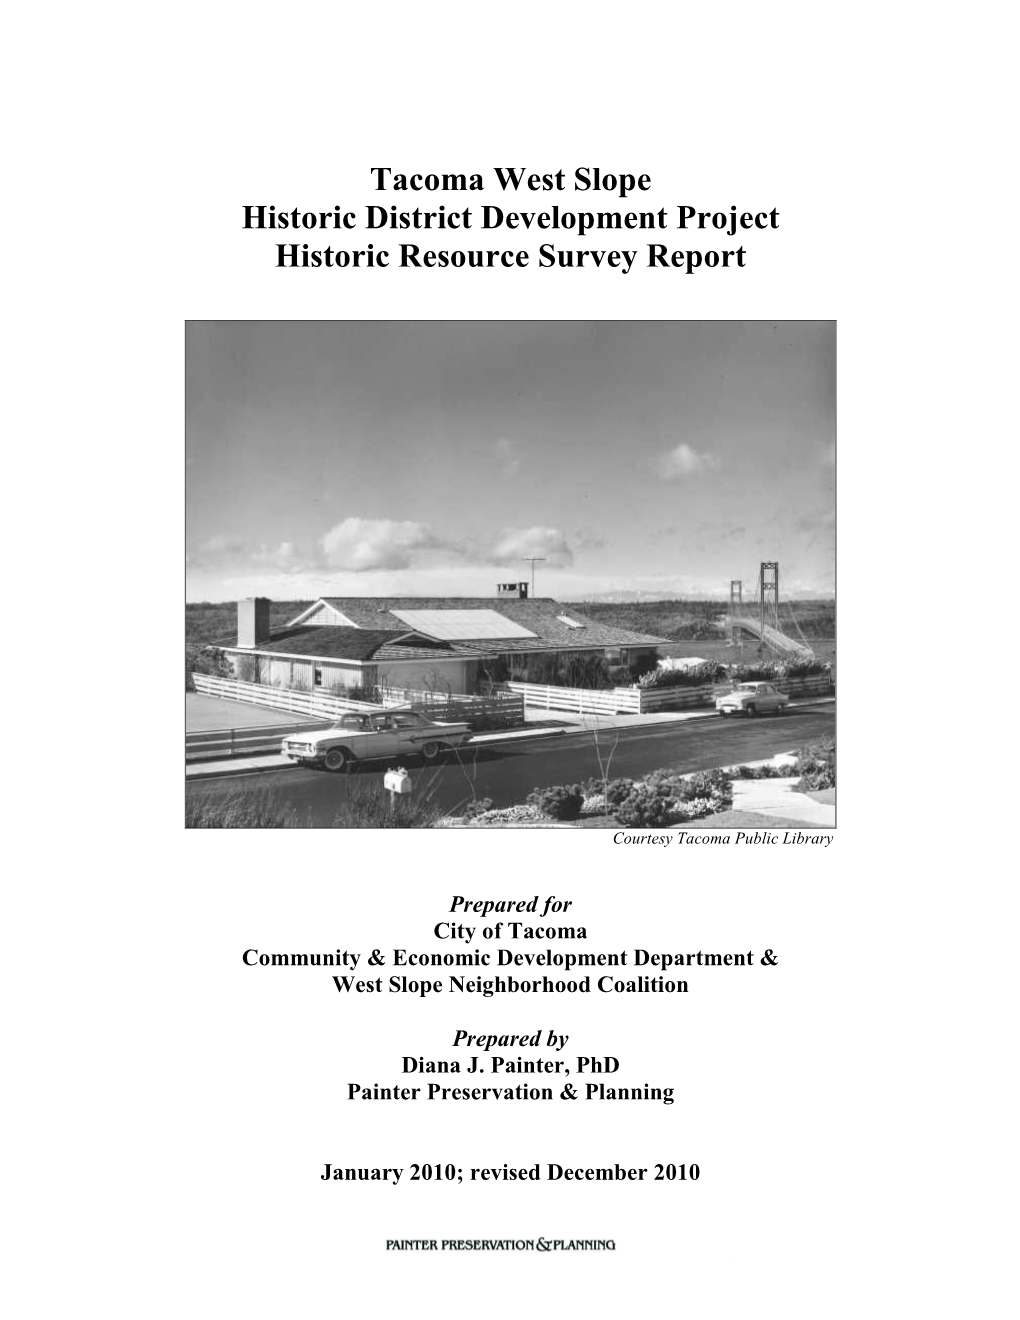 Tacoma West Slope Survey Report